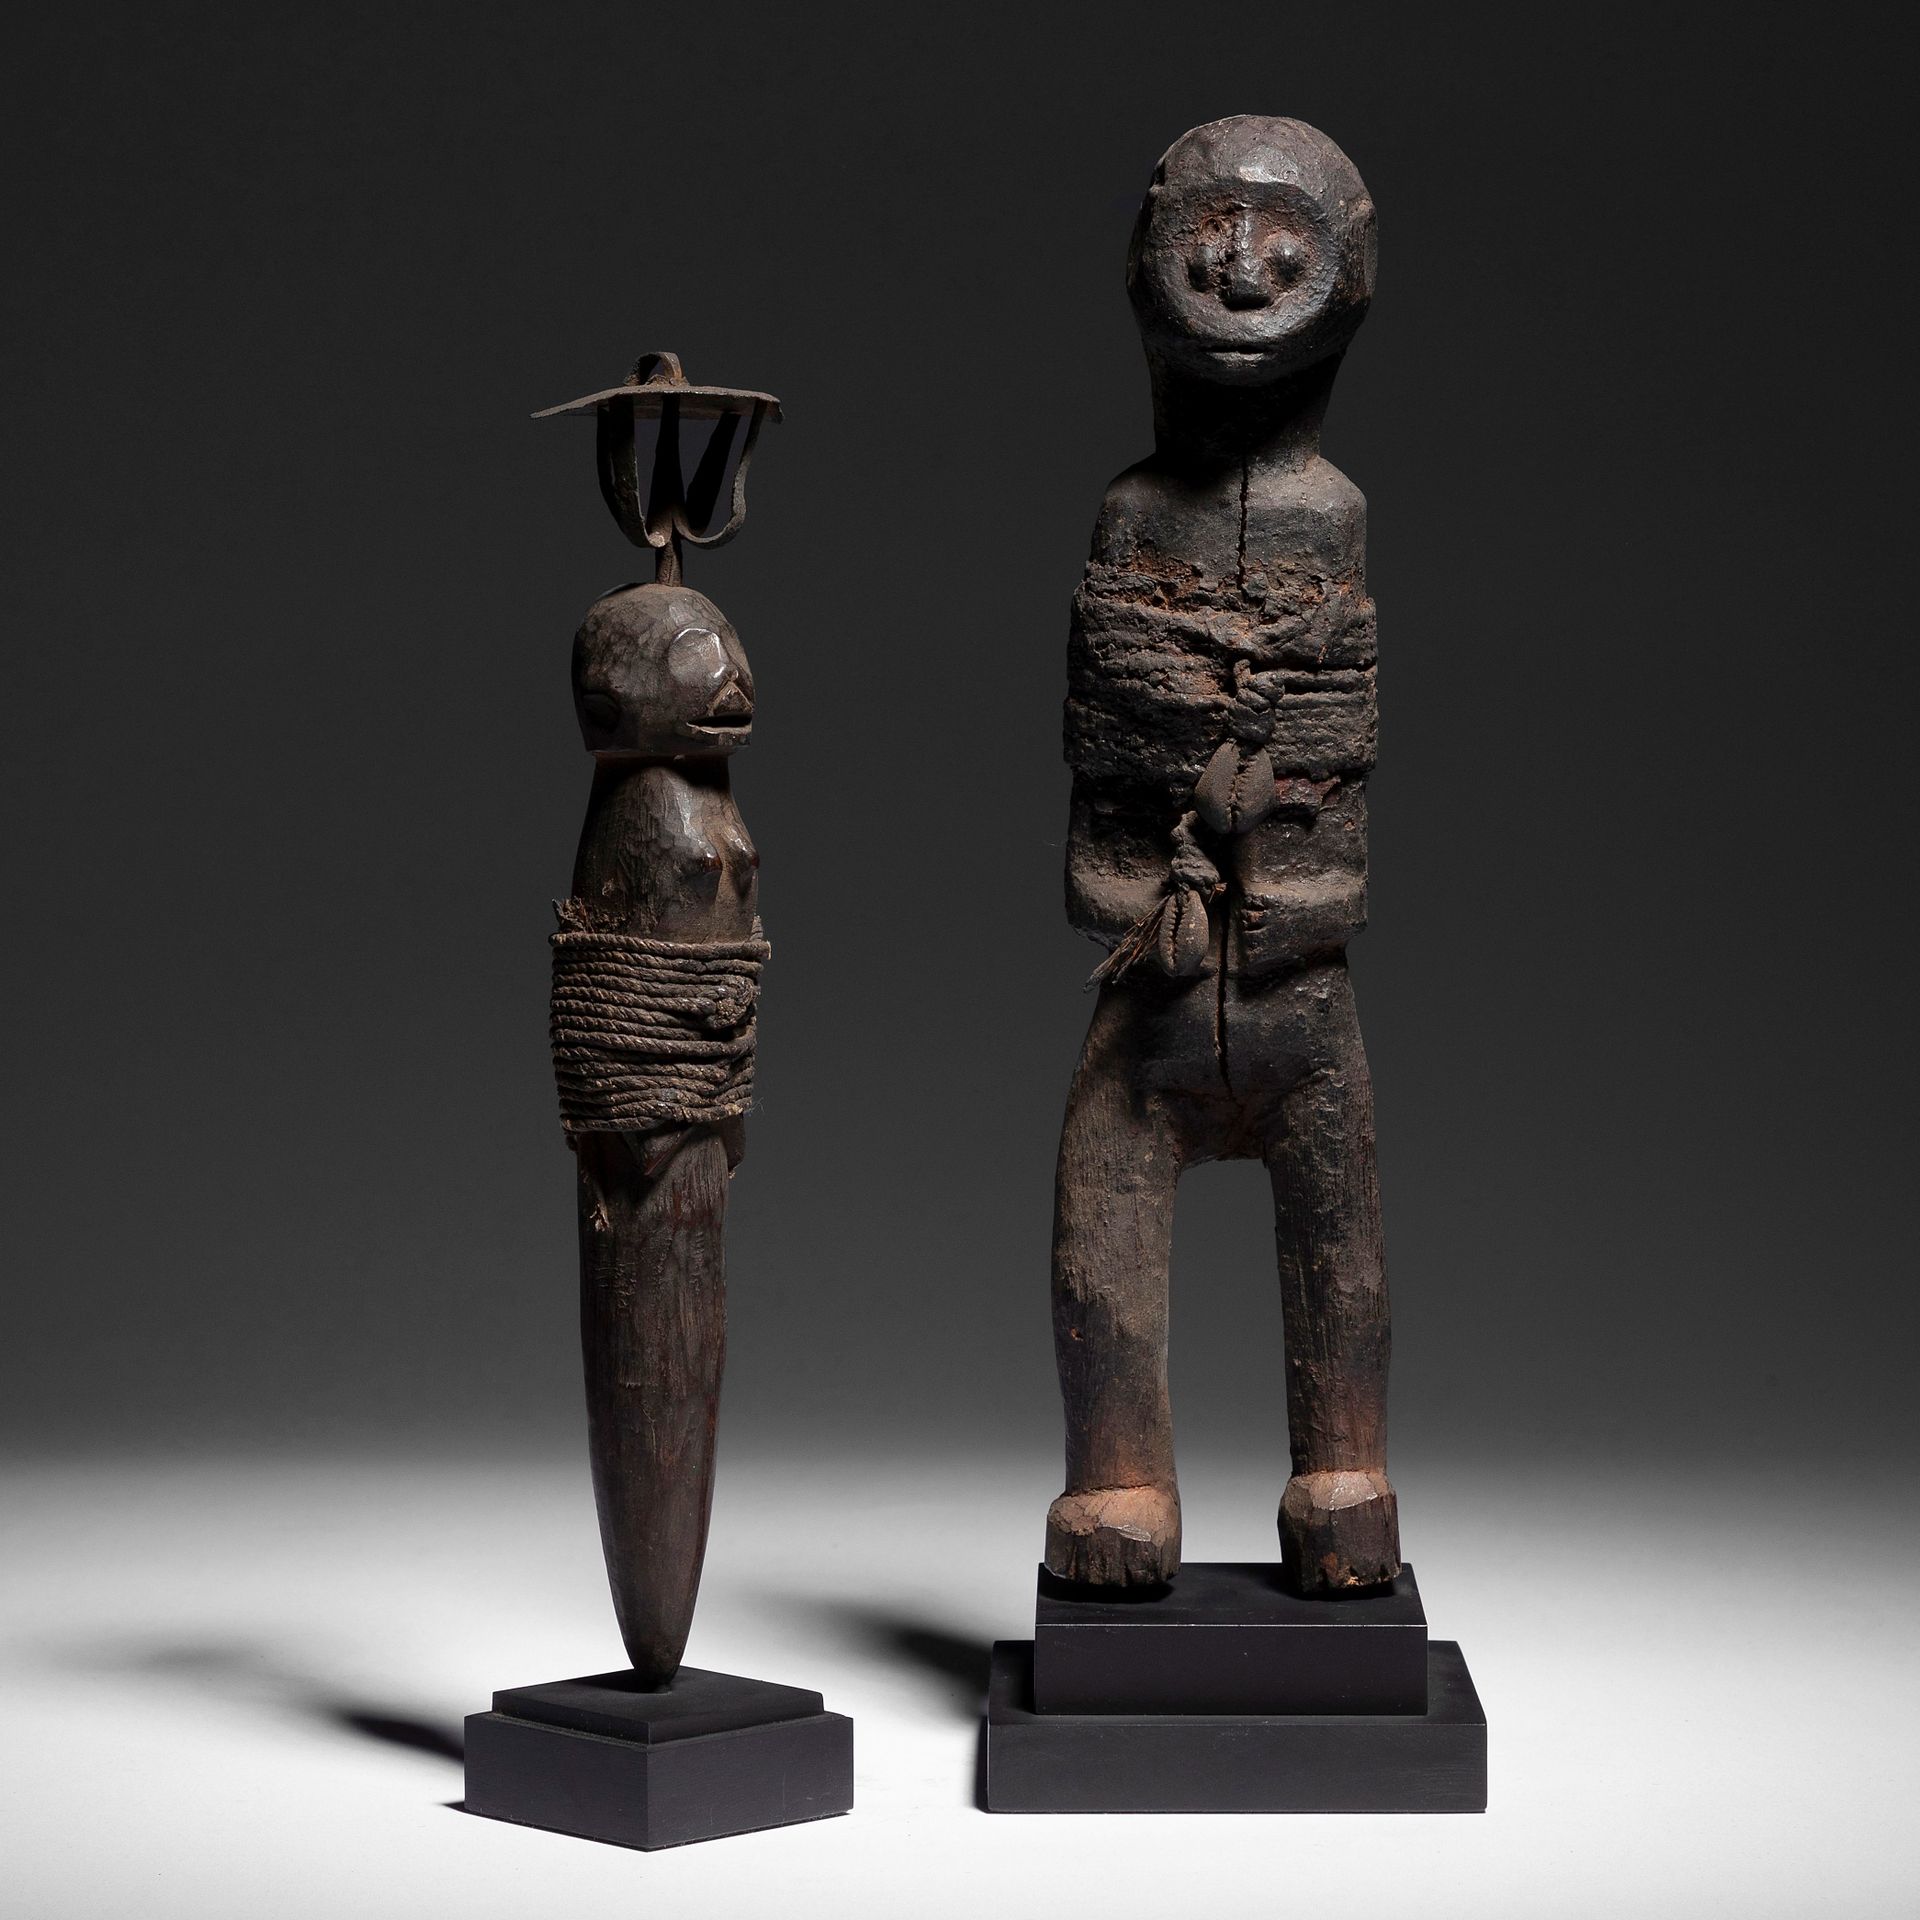 Null 一套两件迷惑和控制的伏都教雕像，其中一件是站立的雕像，另一件是piquet雕像，都是kpoblé（字面意思是 "捆绑的木头"），手臂用绑绳捆绑，阻挡目&hellip;